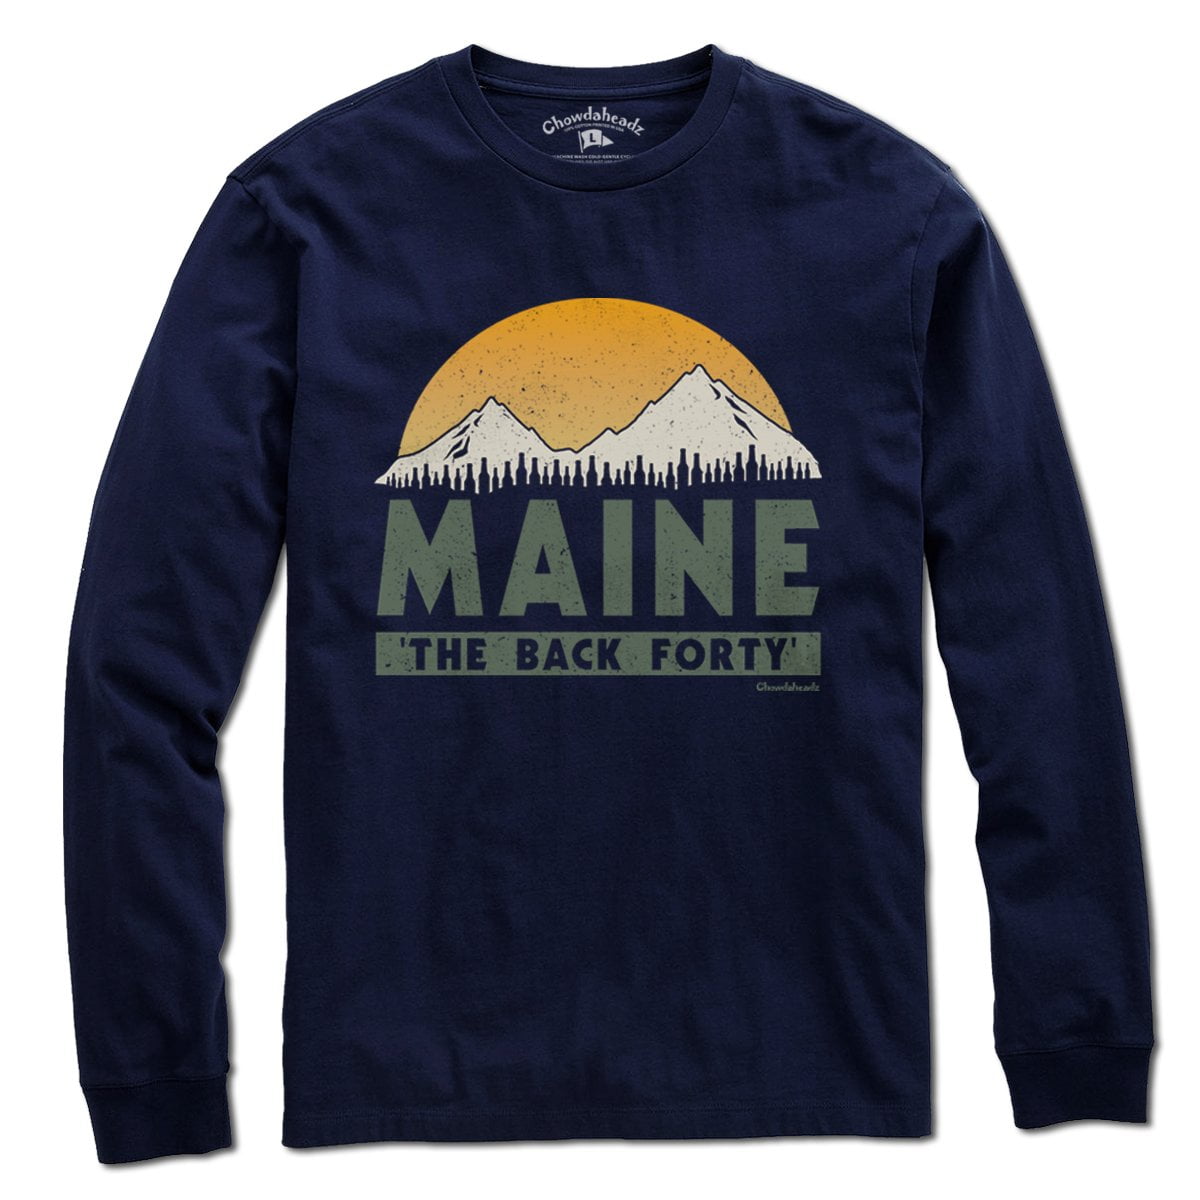 Maine 'The Back Forty' T-Shirt - Chowdaheadz